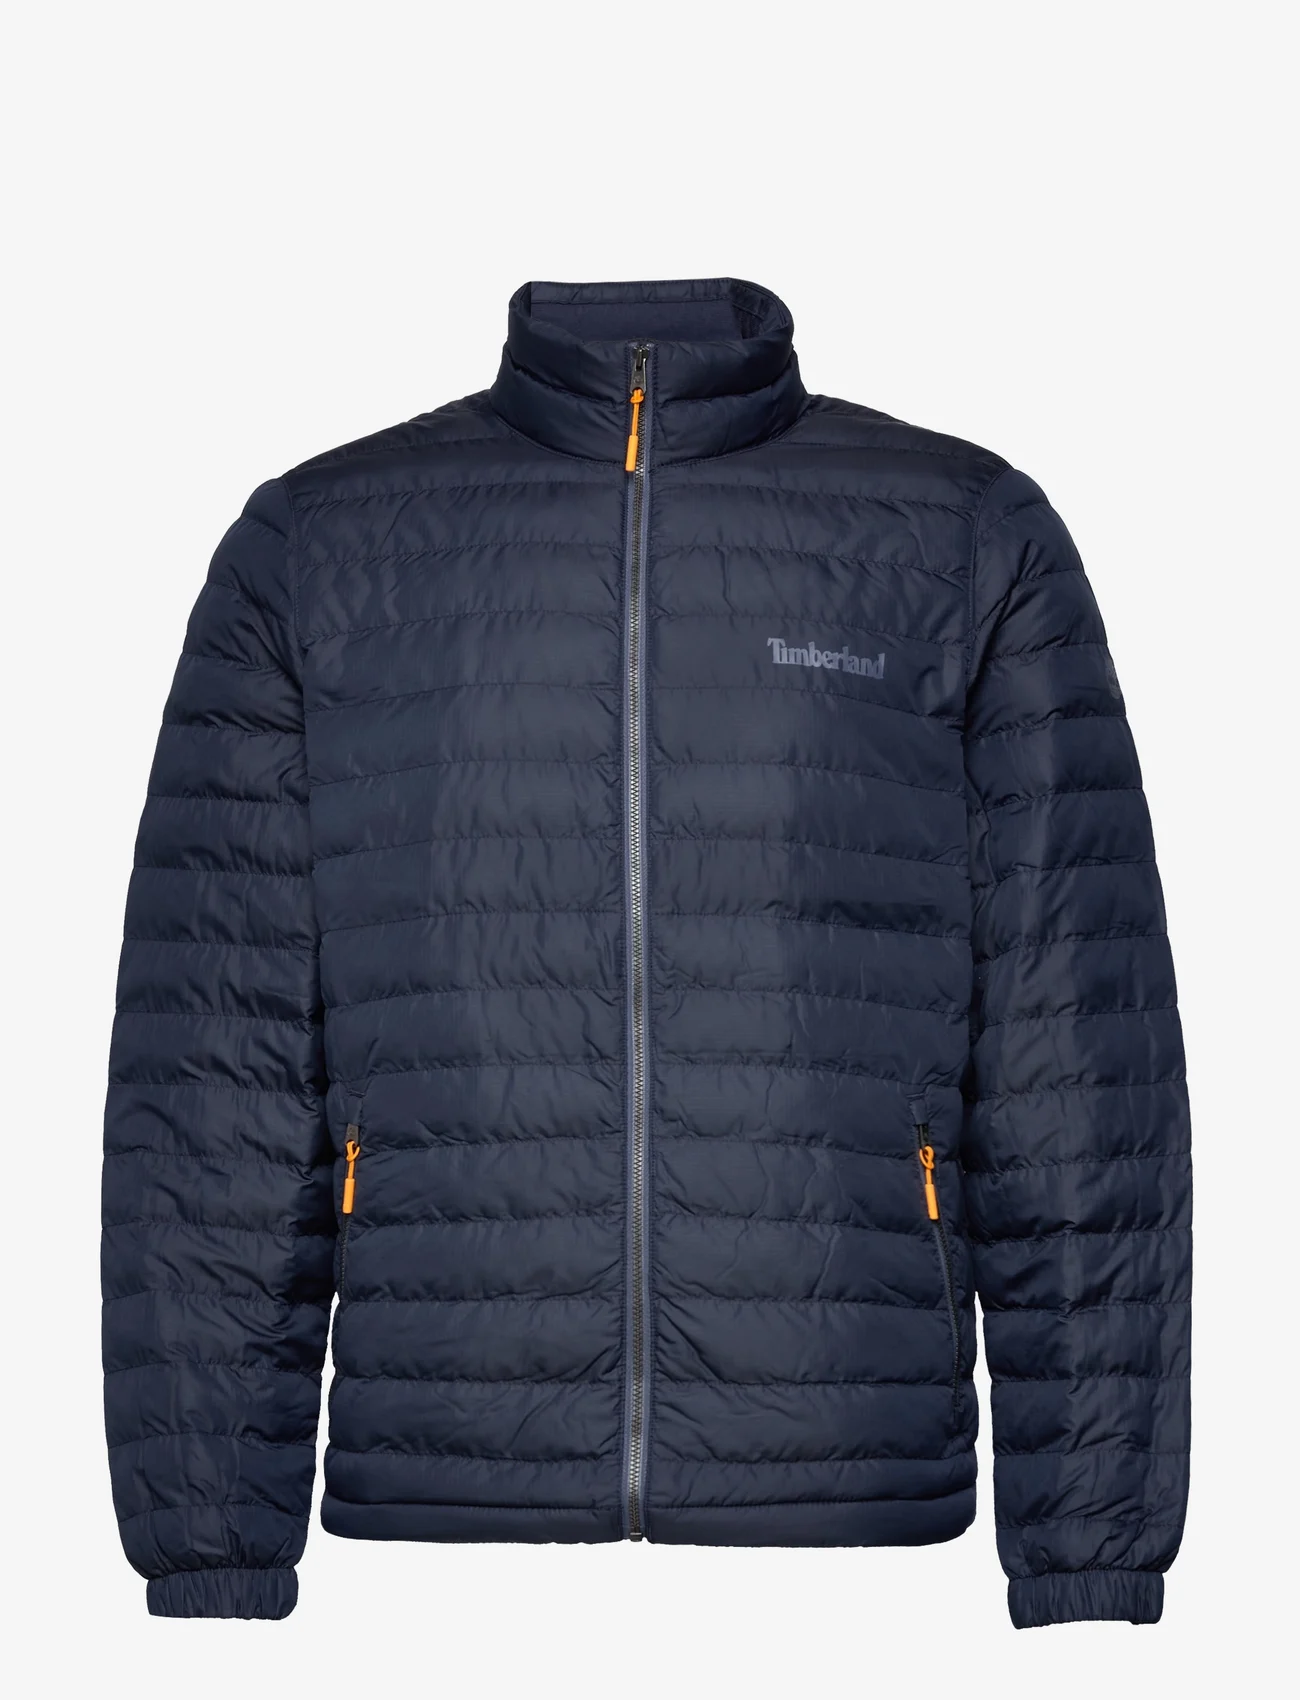 Timberland - Axis Peak DWR Jkt - winter jackets - dark sapphire - 0